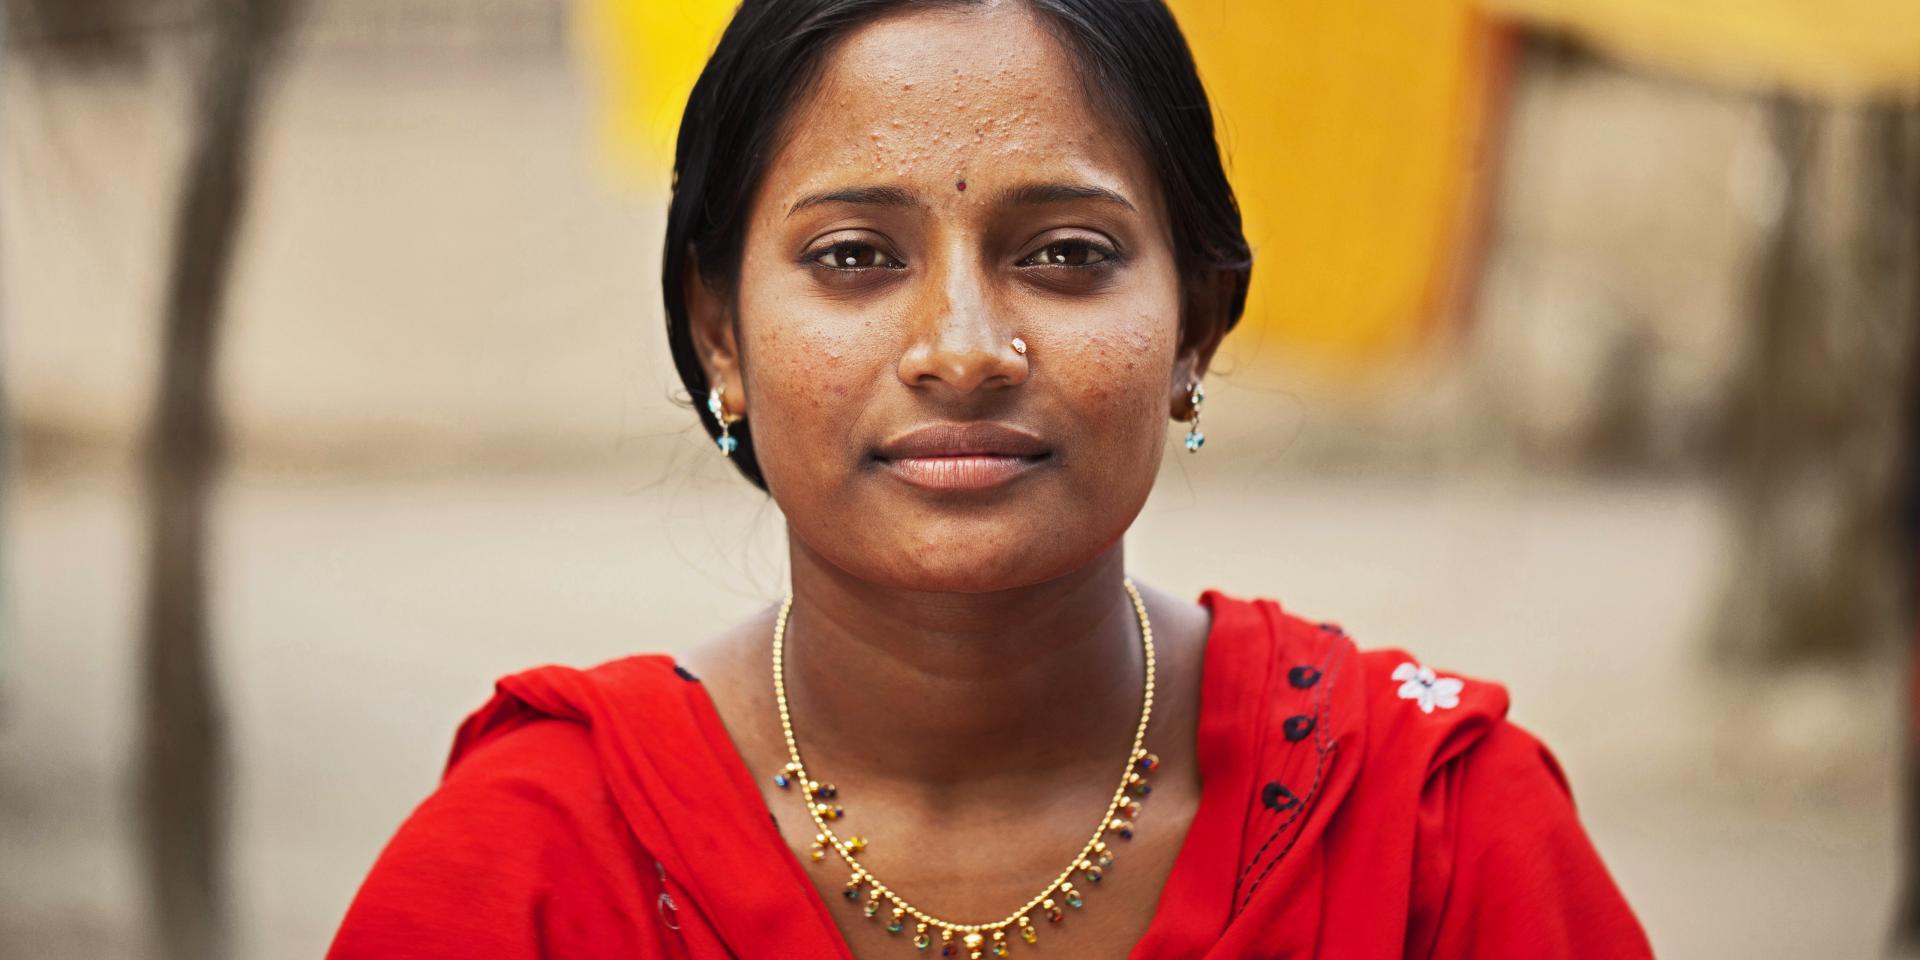 Woman in Bangladesh. Photo: Felix Clay.